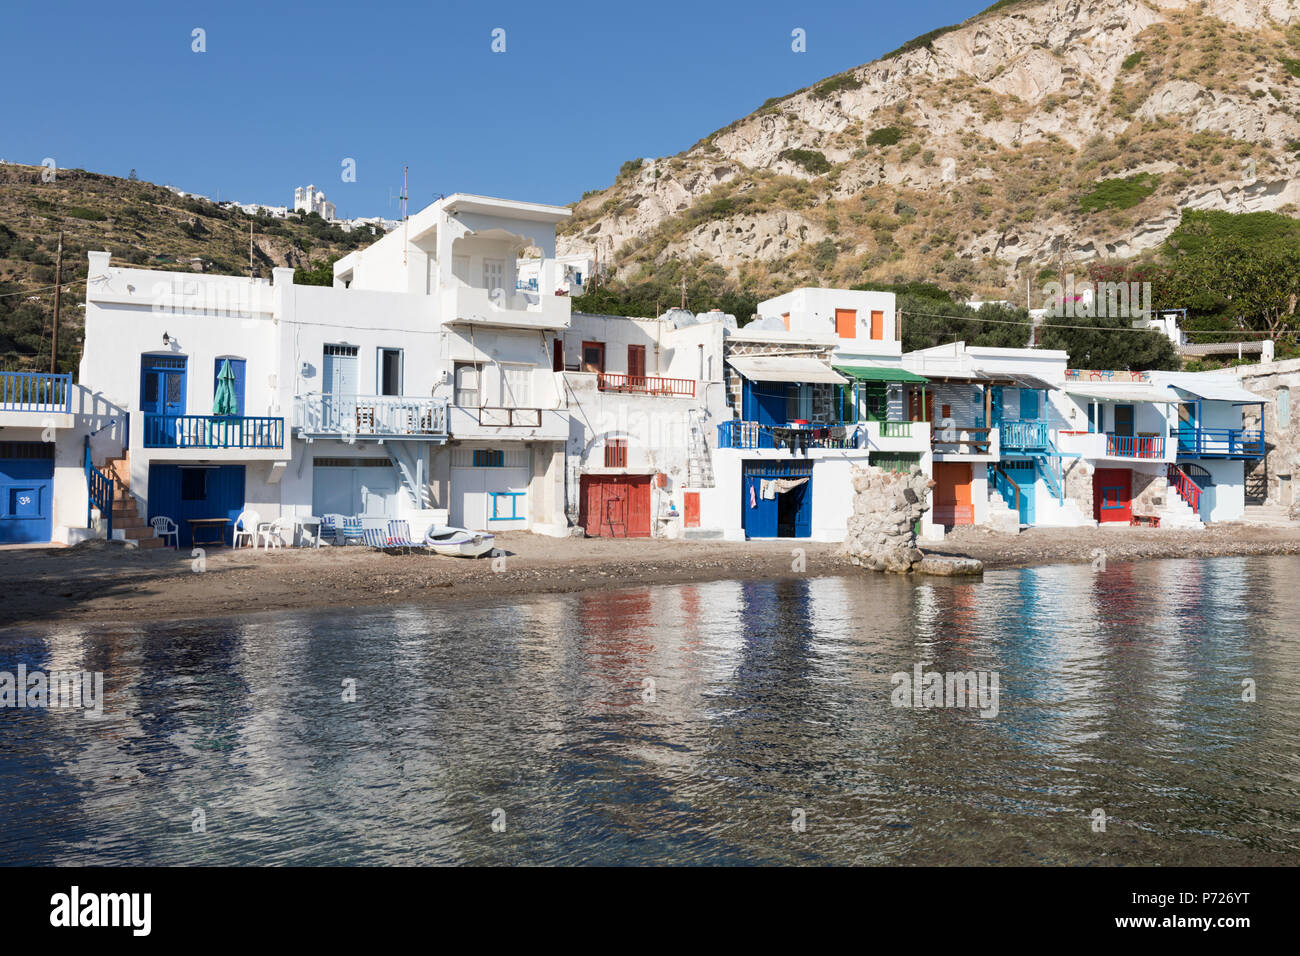 Colourful fishermen's boat houses with Plaka on hill, Klima, Milos, Cyclades, Aegean Sea, Greek Islands, Greece, Europe Stock Photo